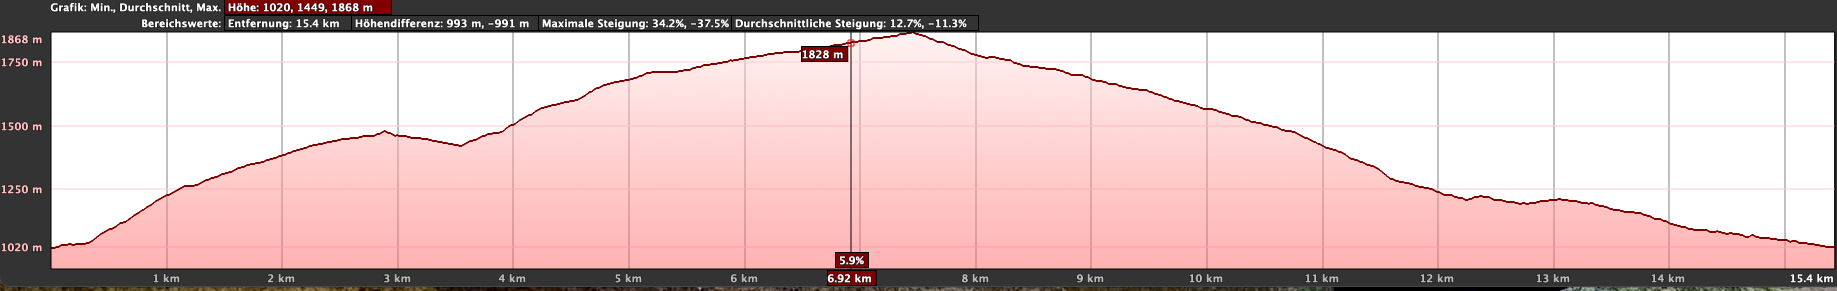 Elevation profile of the Chirche hike via Galería Machado 1 and via the Refugio de Chasogo (variant 2)